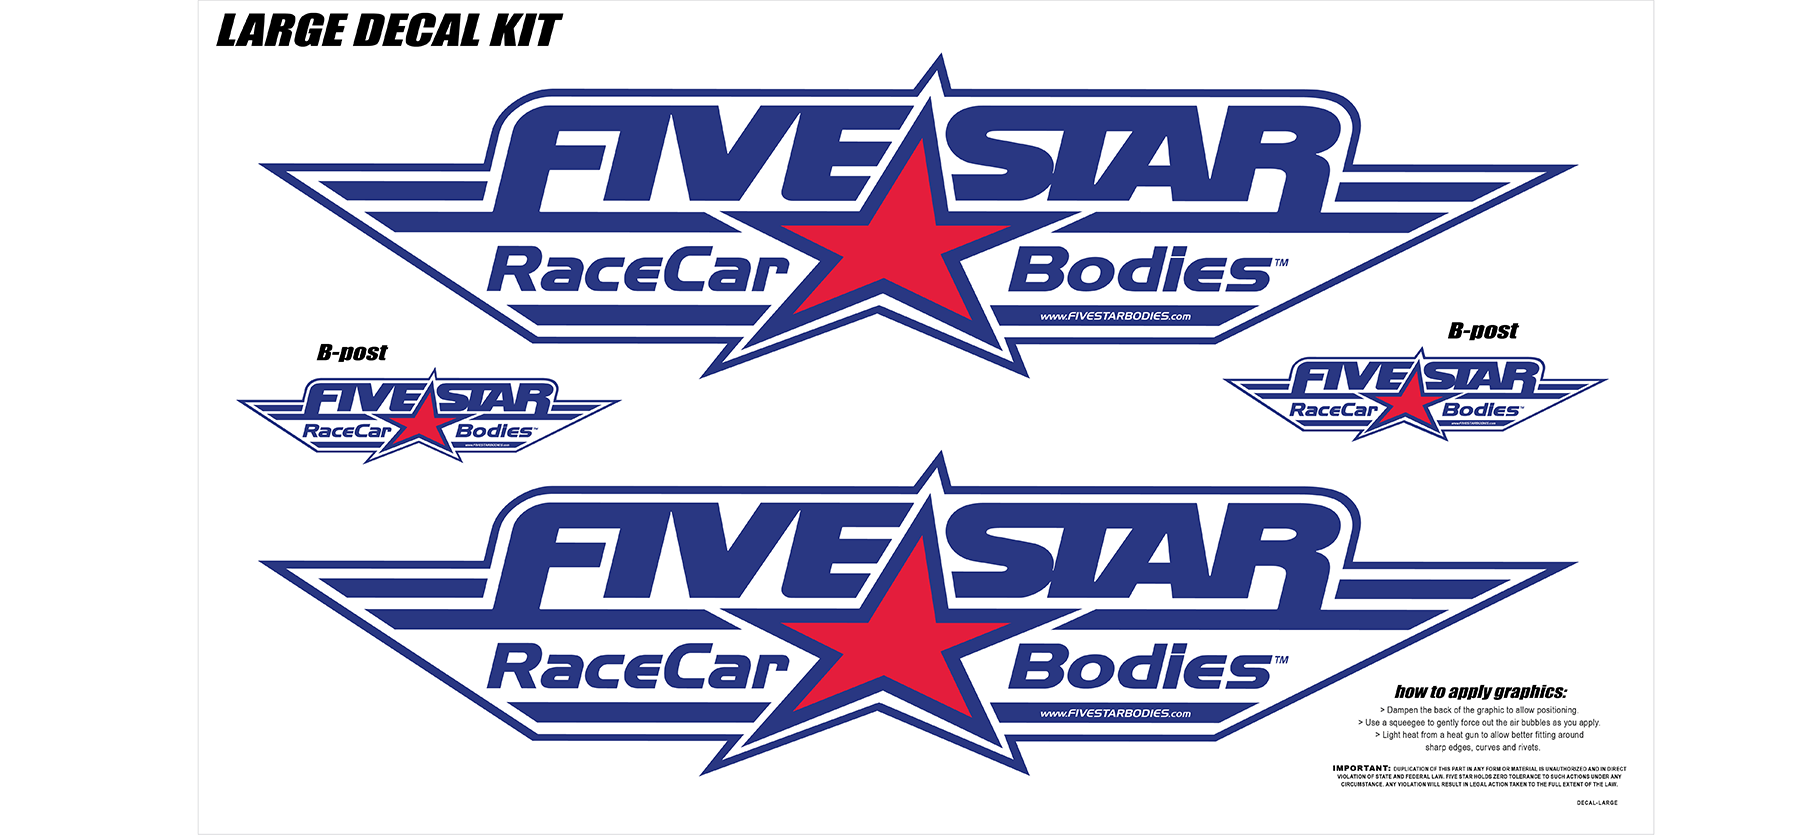 Five Star Race Car Bodies